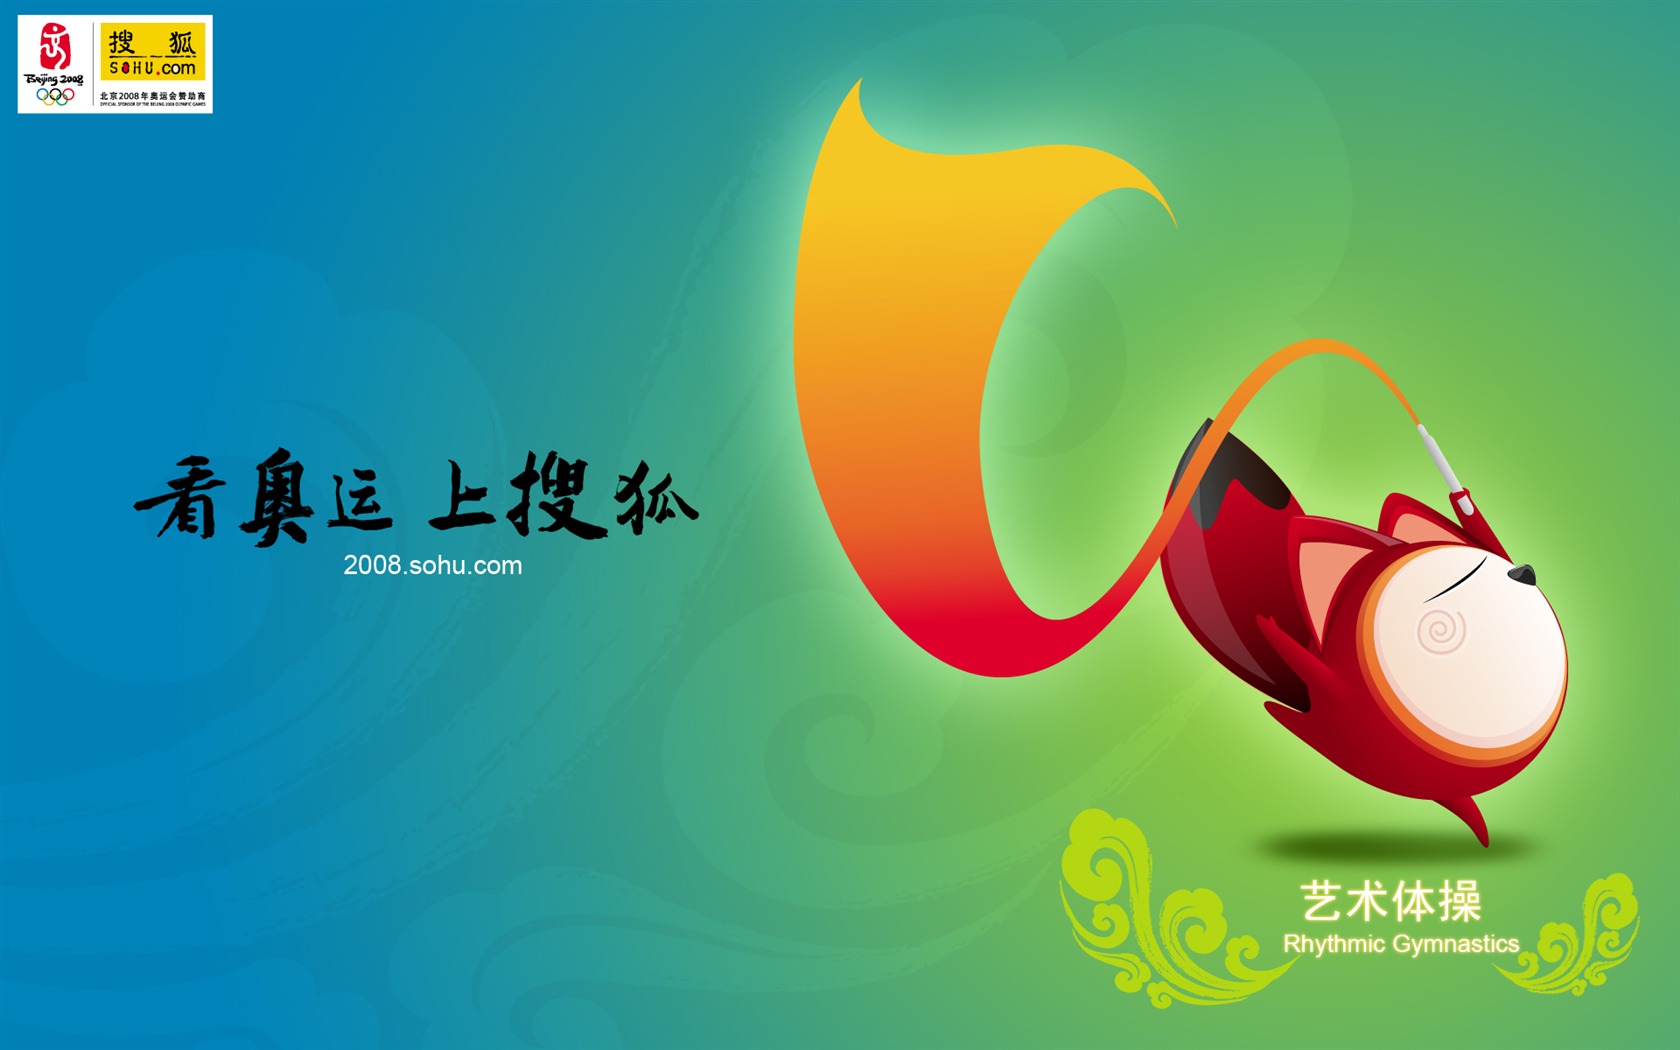 Sohu Olympic sports style wallpaper #18 - 1680x1050